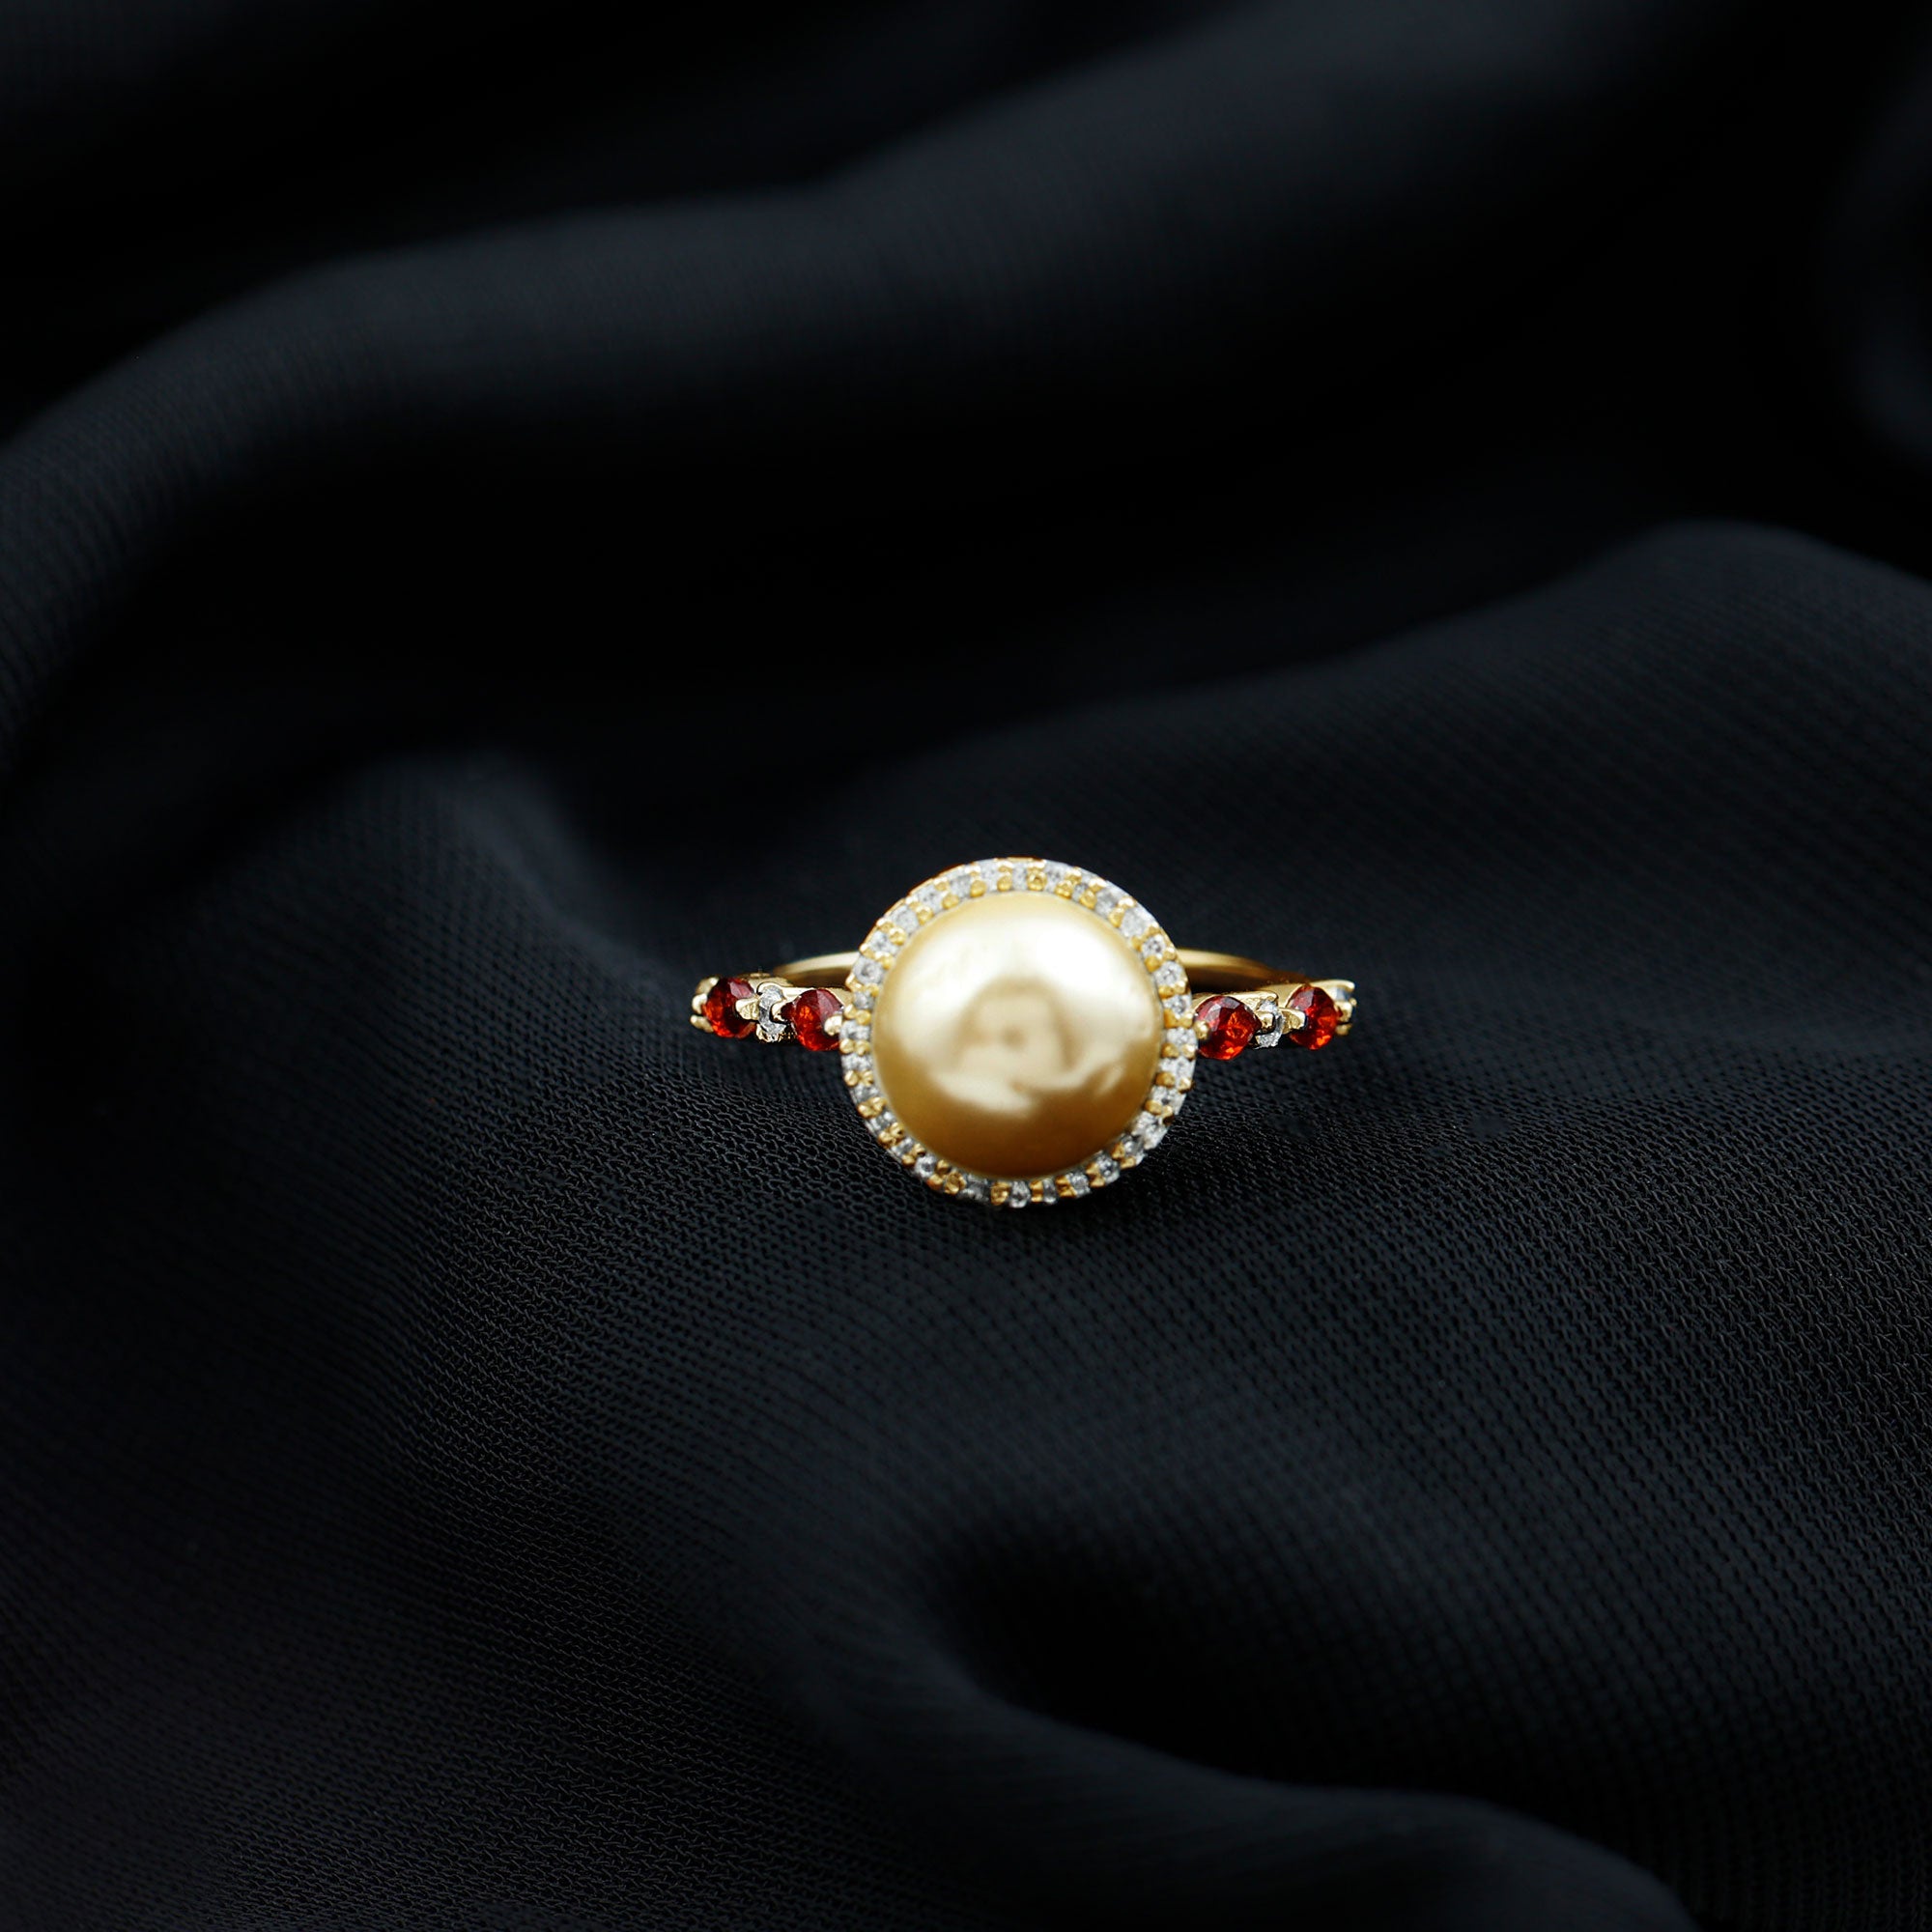 Statement South Sea Pearl Halo Ring with Diamond and Garnet South Sea Pearl-AAAA Quality - Arisha Jewels